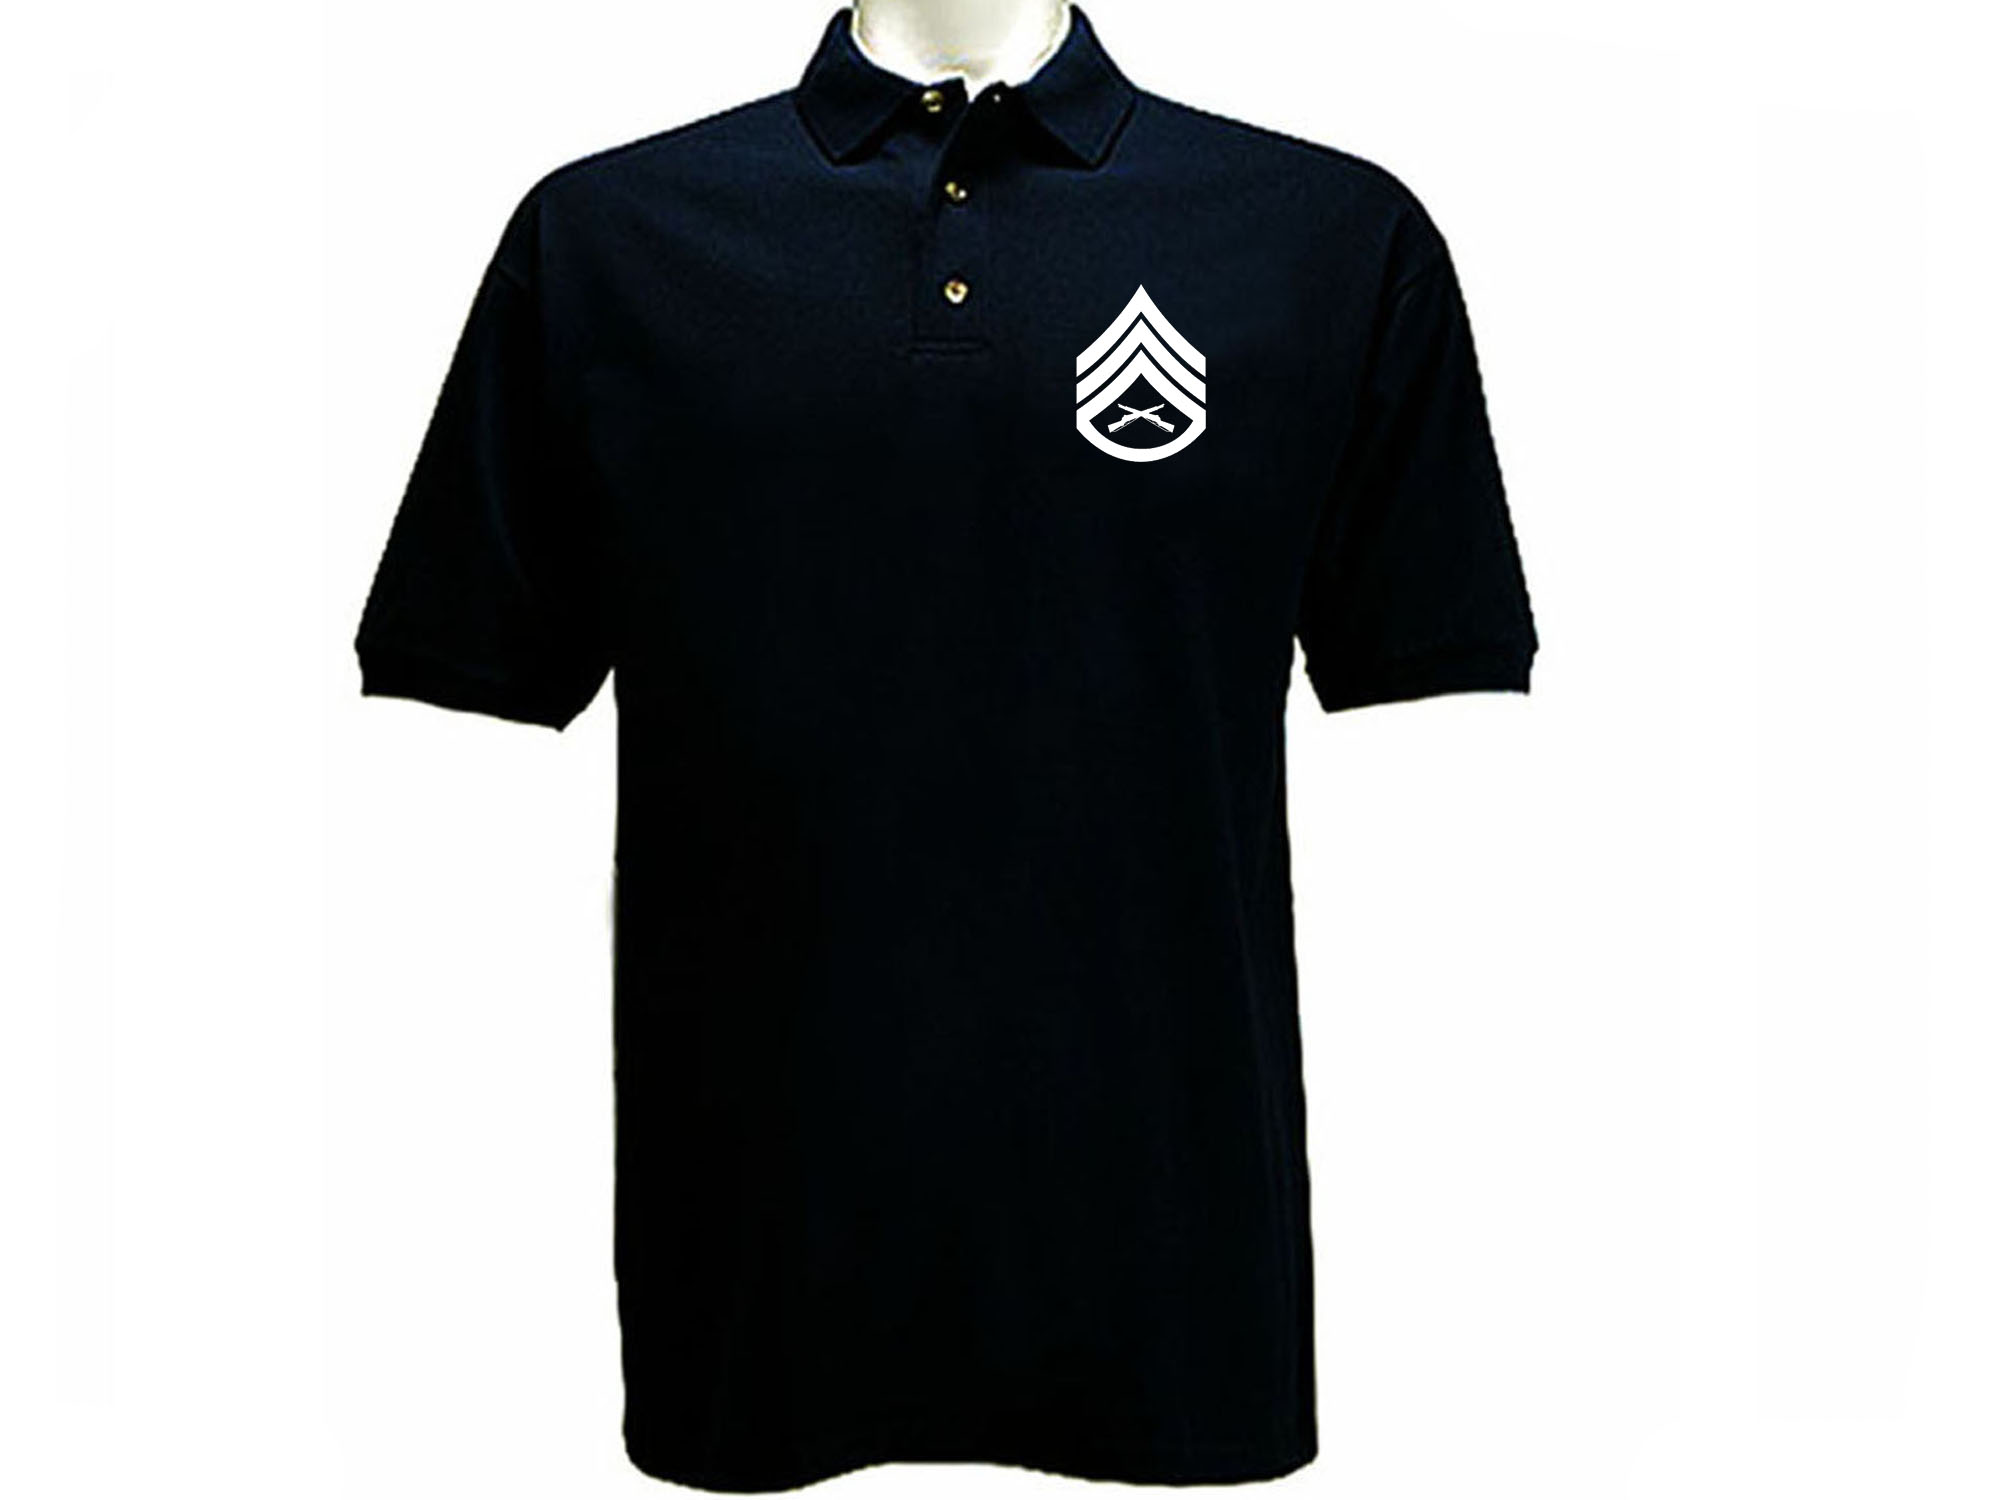 US army marine corps USMC Staff Sergeant polo style t shirt